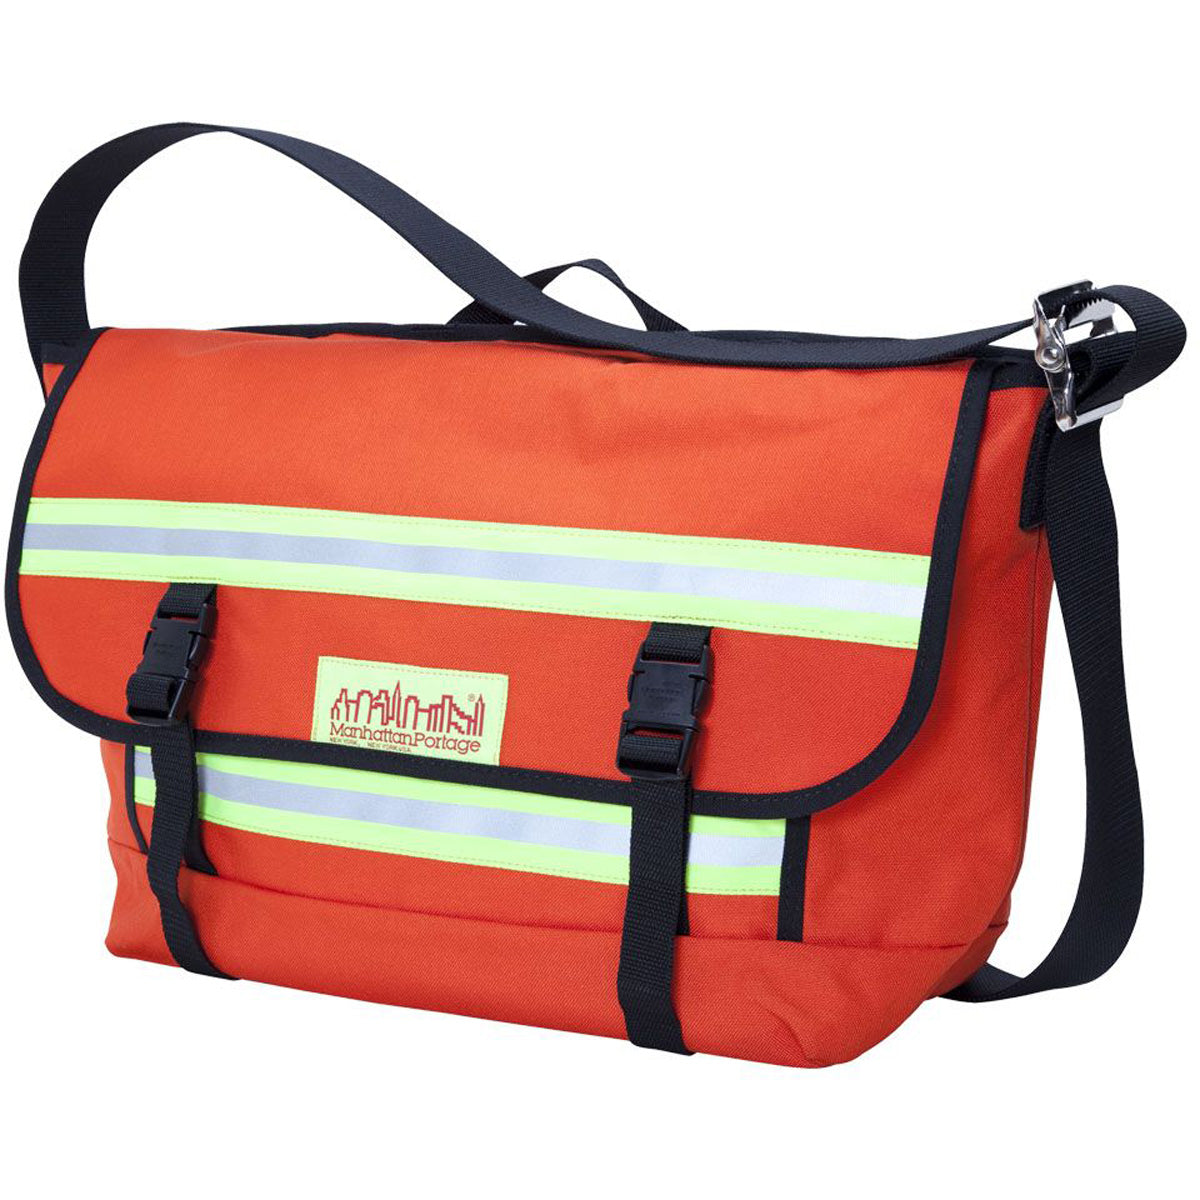 Manhattan Portage Pro Bike Messenger Bag with Stripes Medium Orange